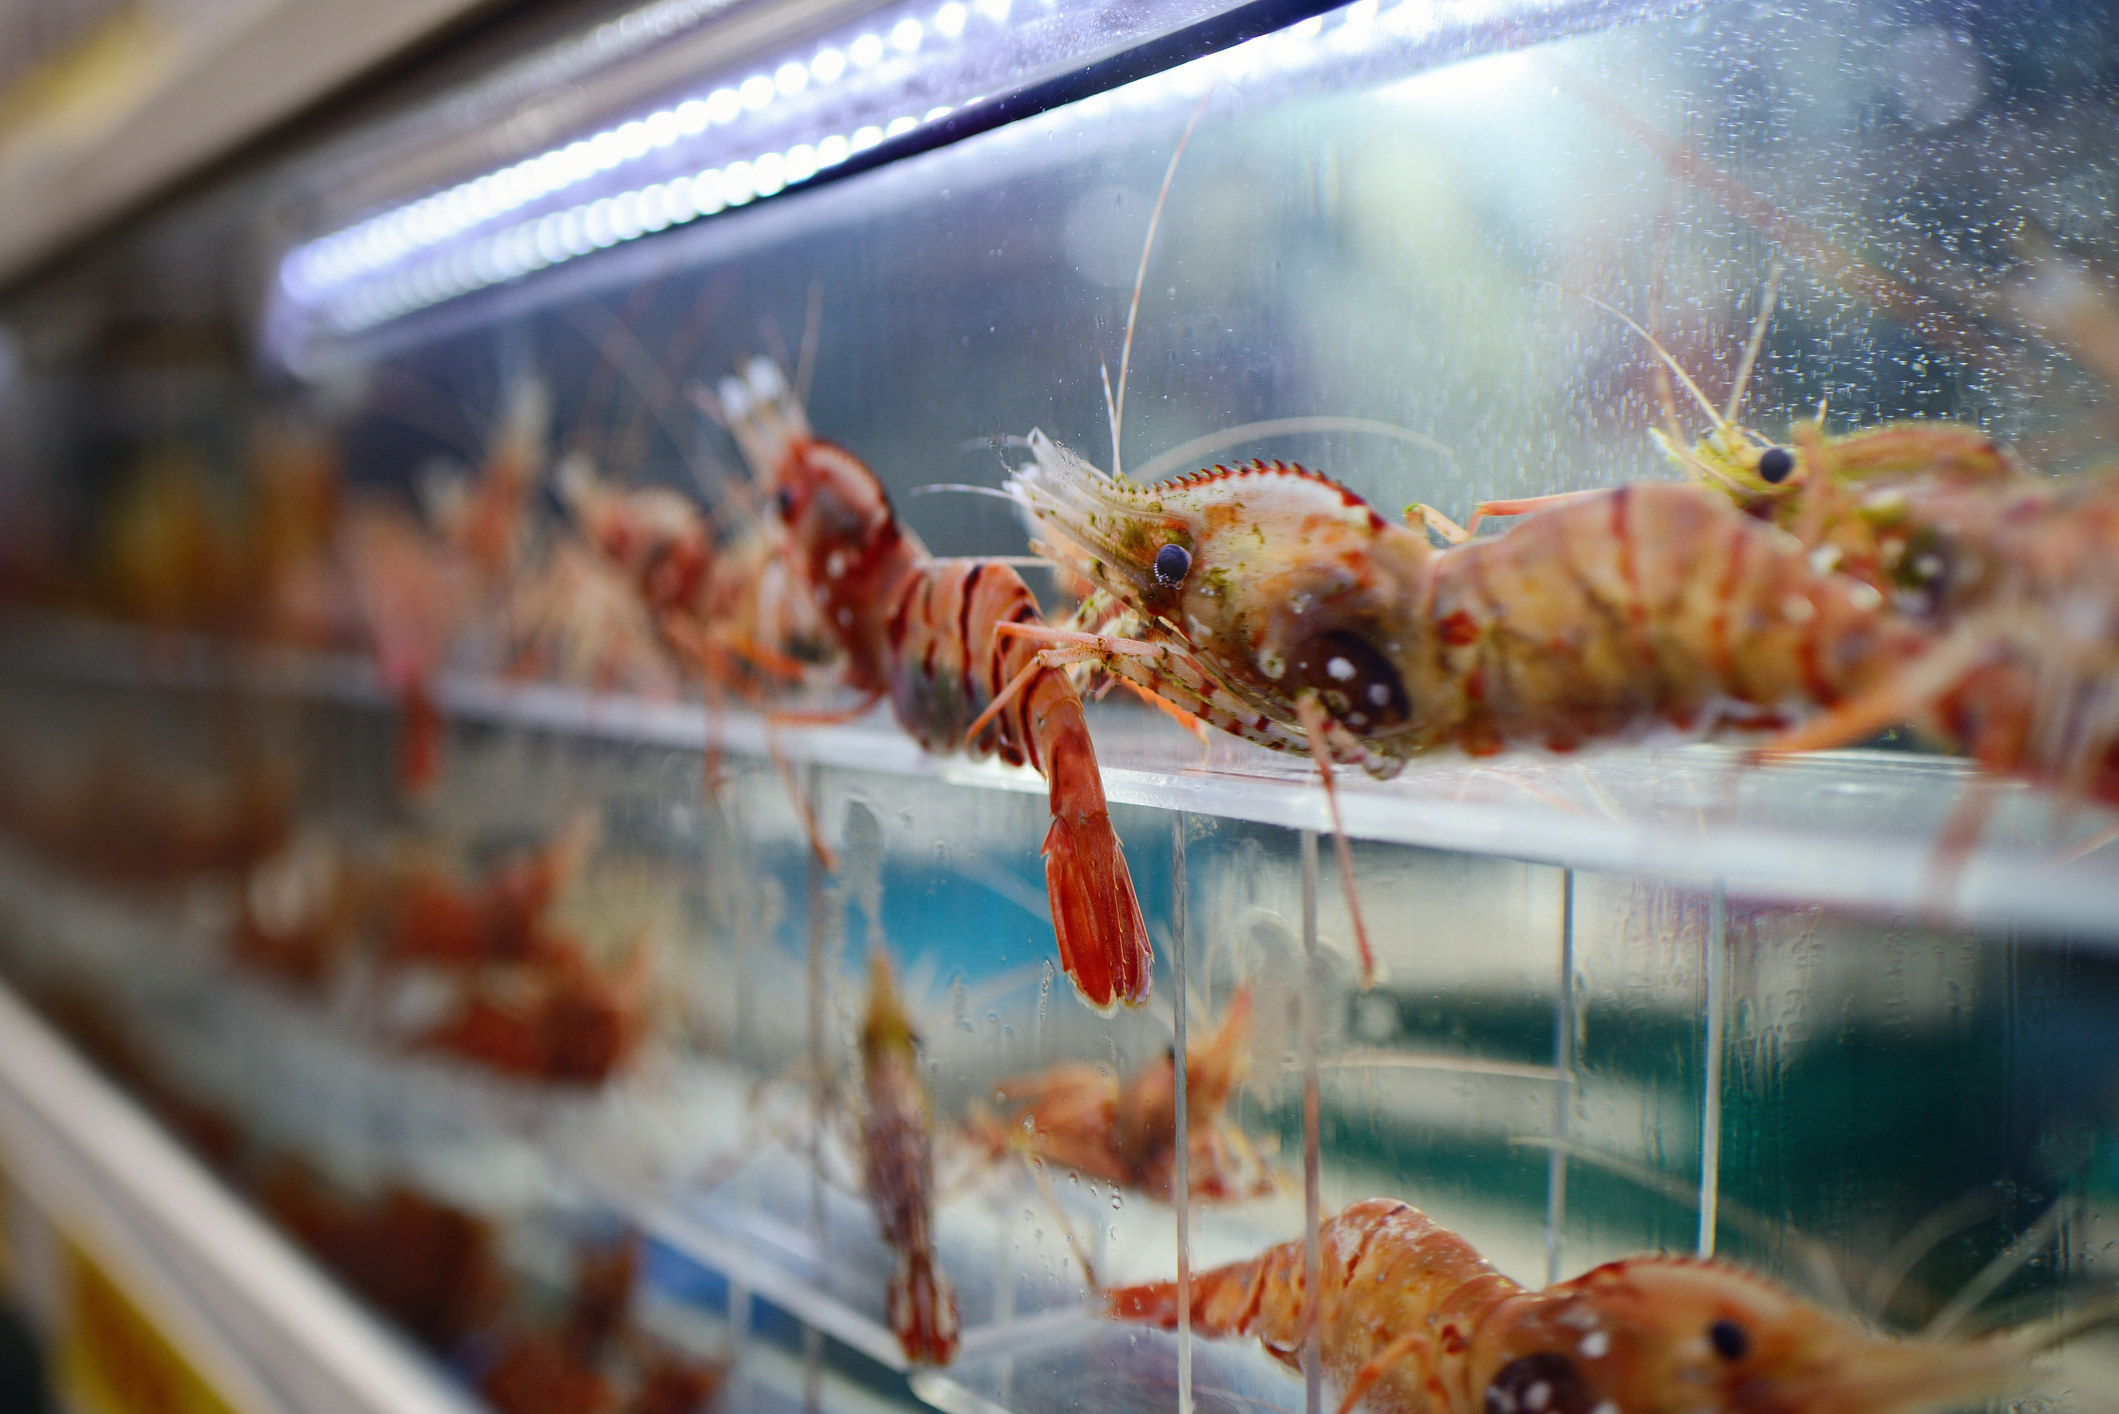 Live prawns on display at a restaurant.